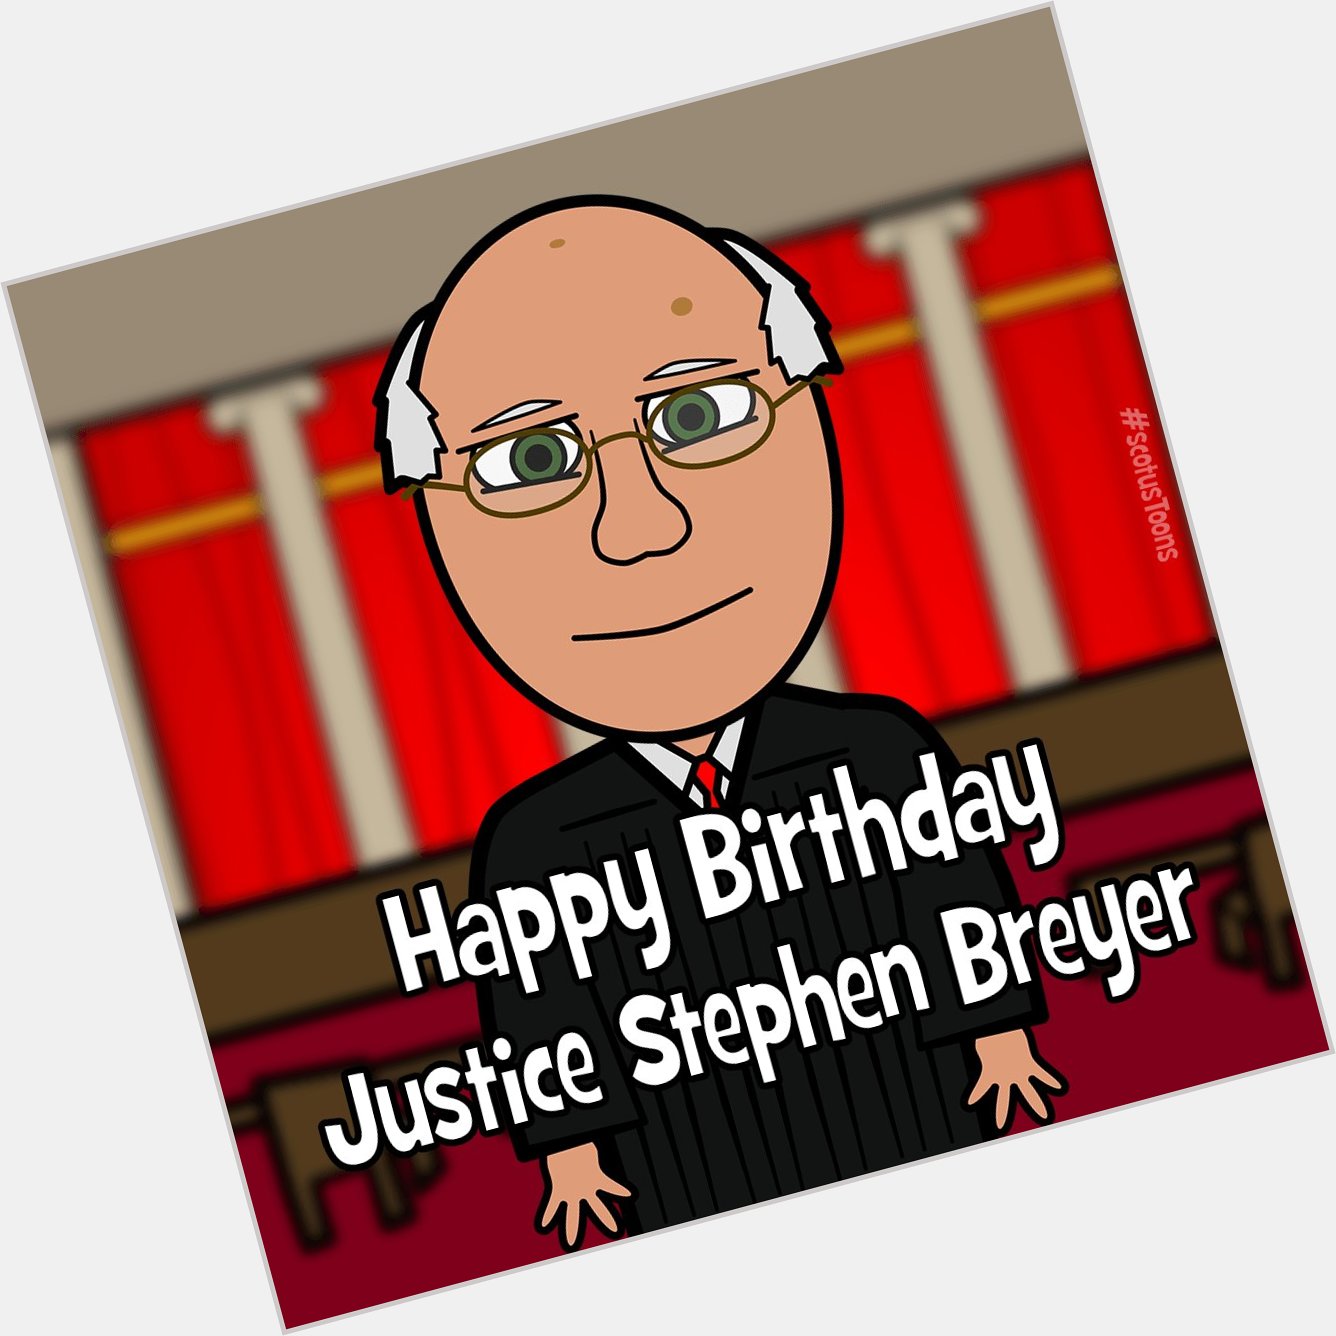 Happy Birthday Justice Stephen Breyer!    